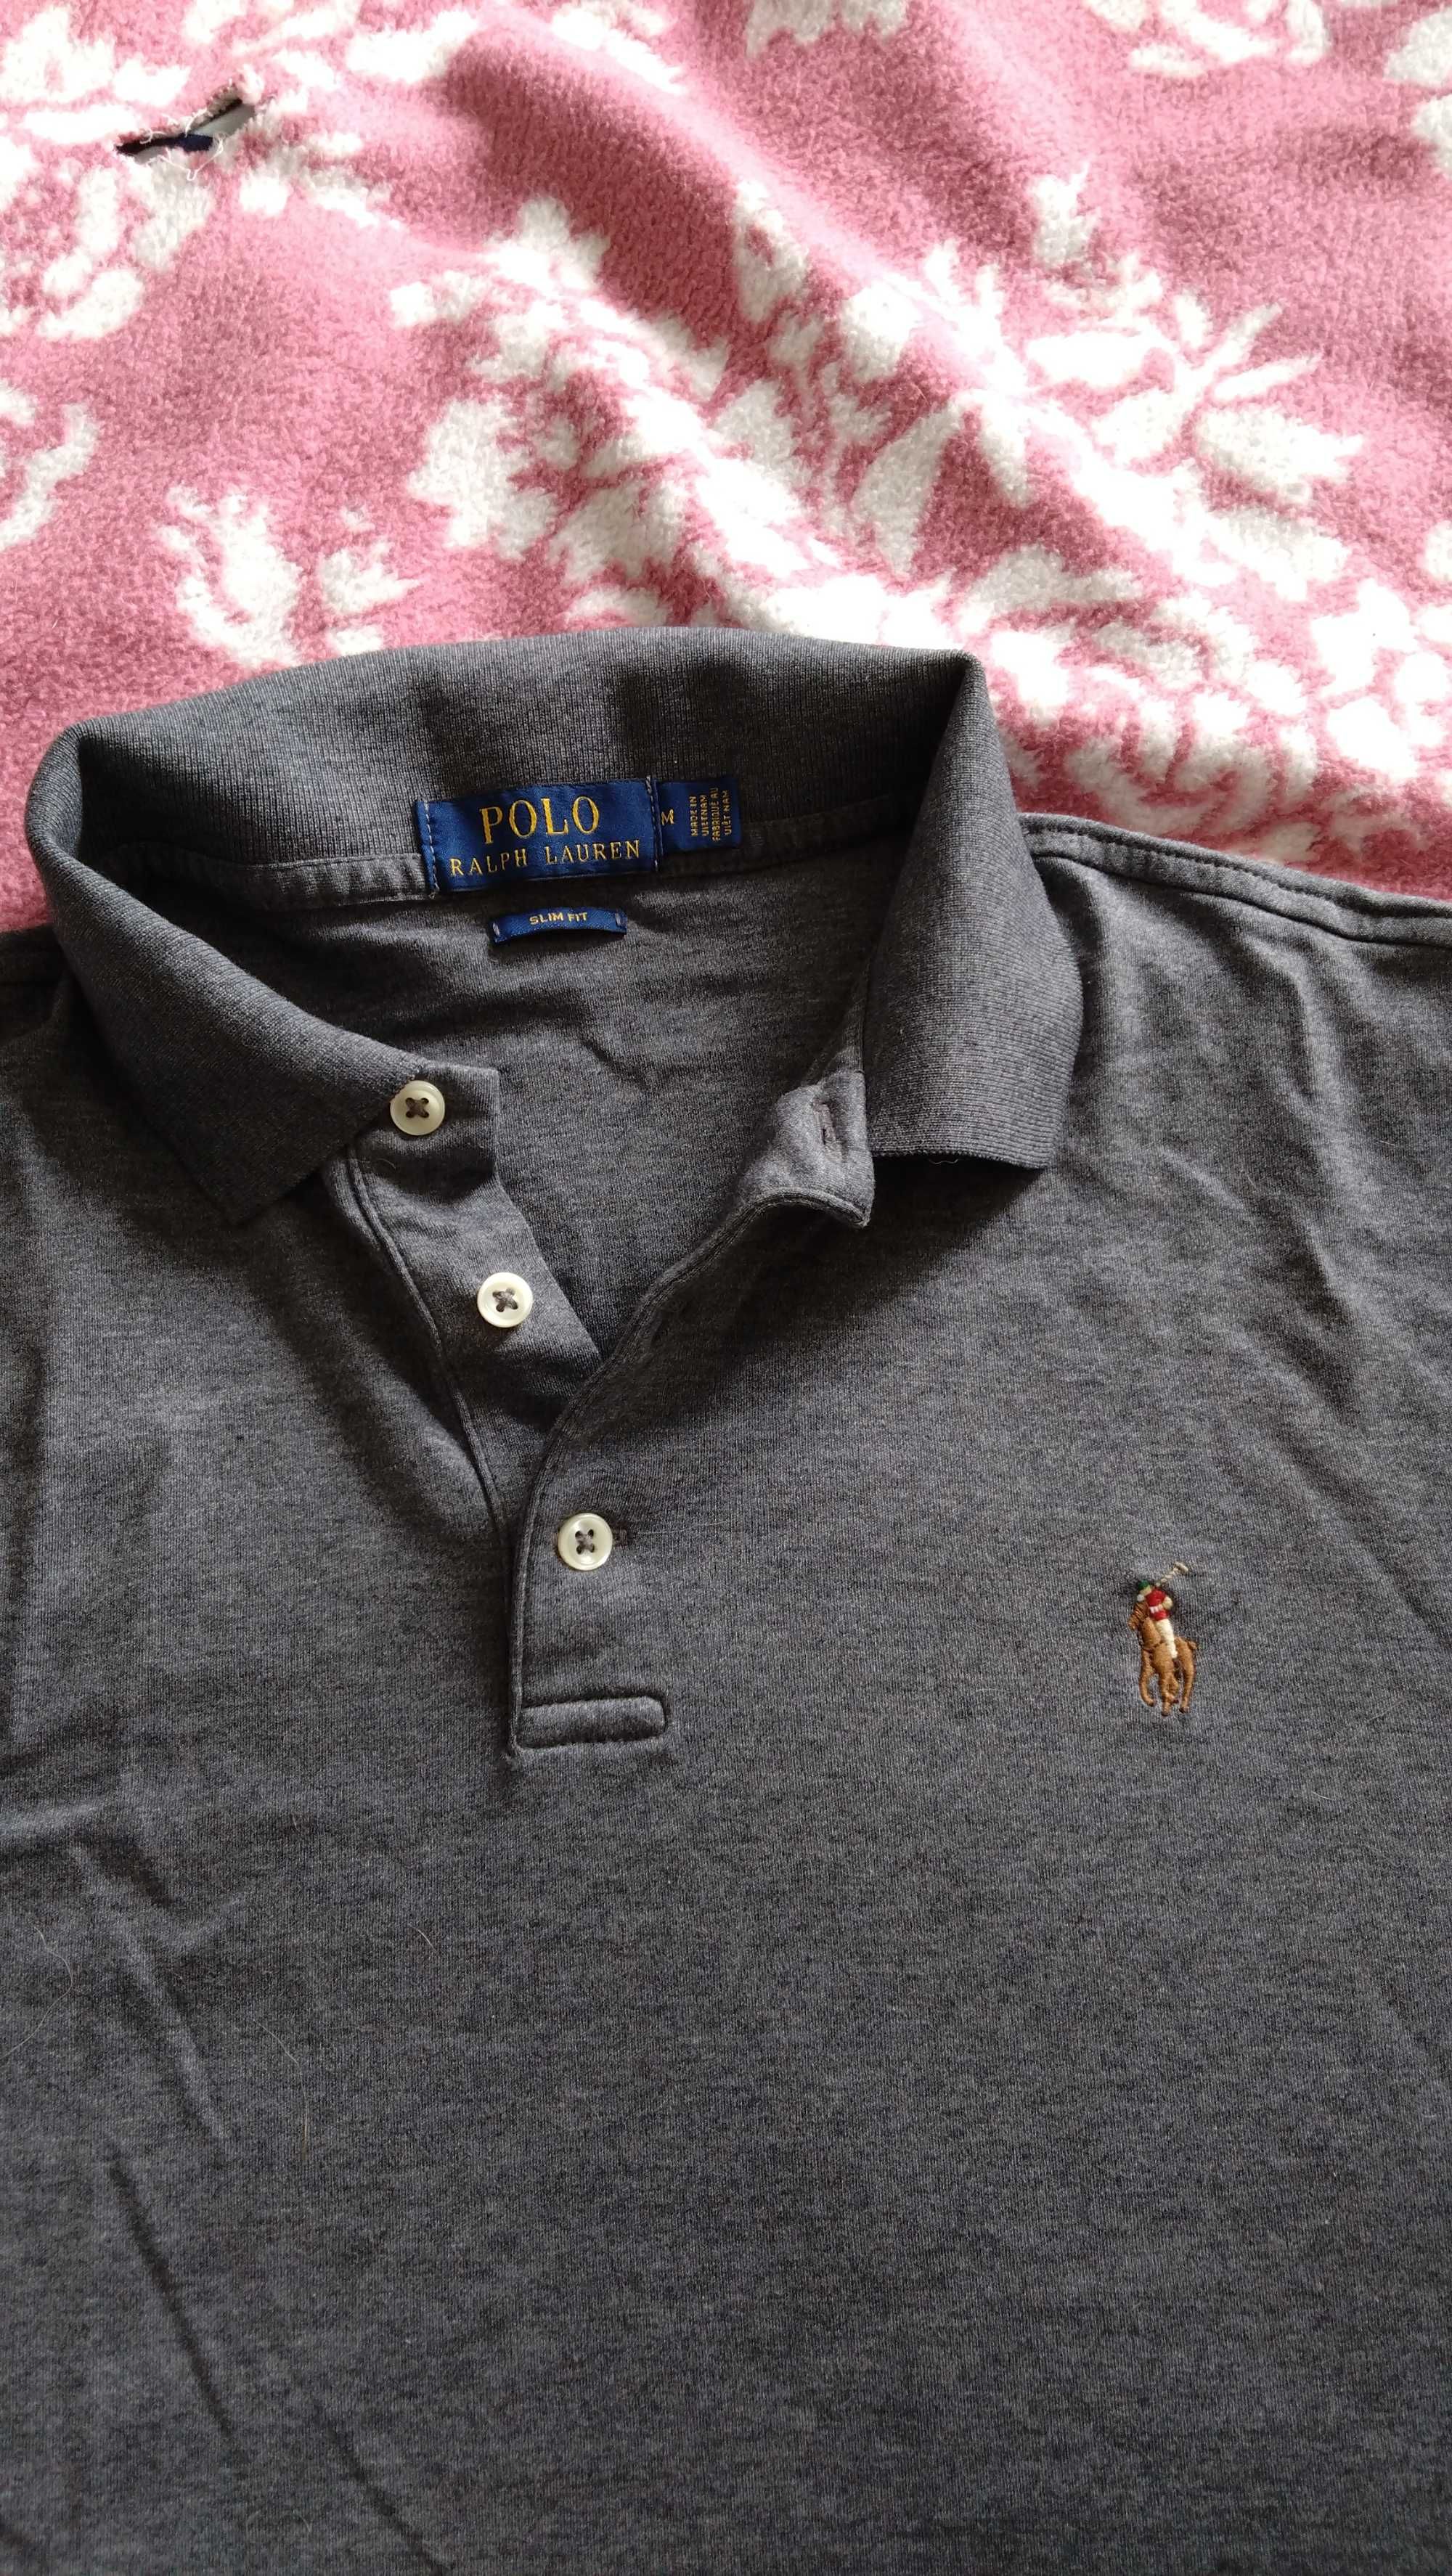 Polo Ralph Lauren koszulka polo soft touch slim fit szara r. M